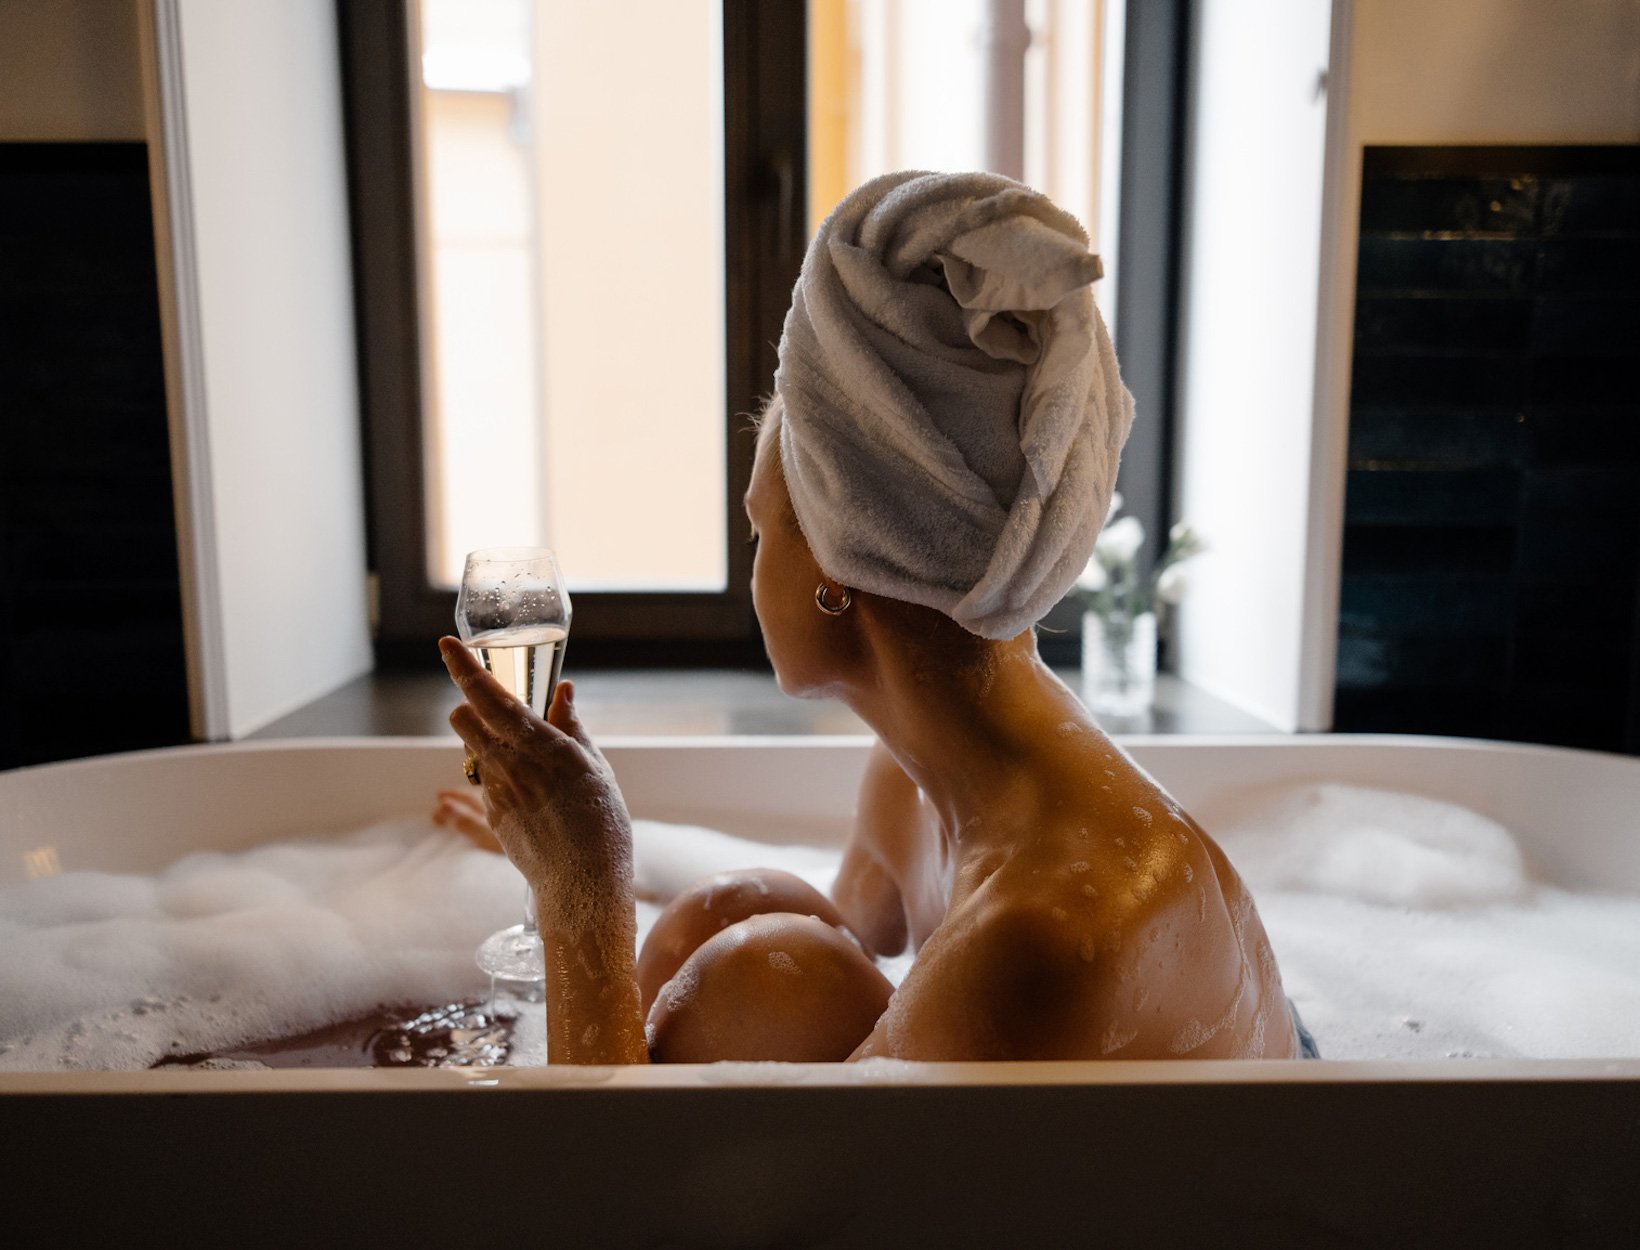 Spa Rituals Mini Travel Size Toiletries Bathroom Kit | Fresh Botanicals|  Shampoo, Conditioner, Body Wash, Lotion, Cleansing Round Bar and Massage